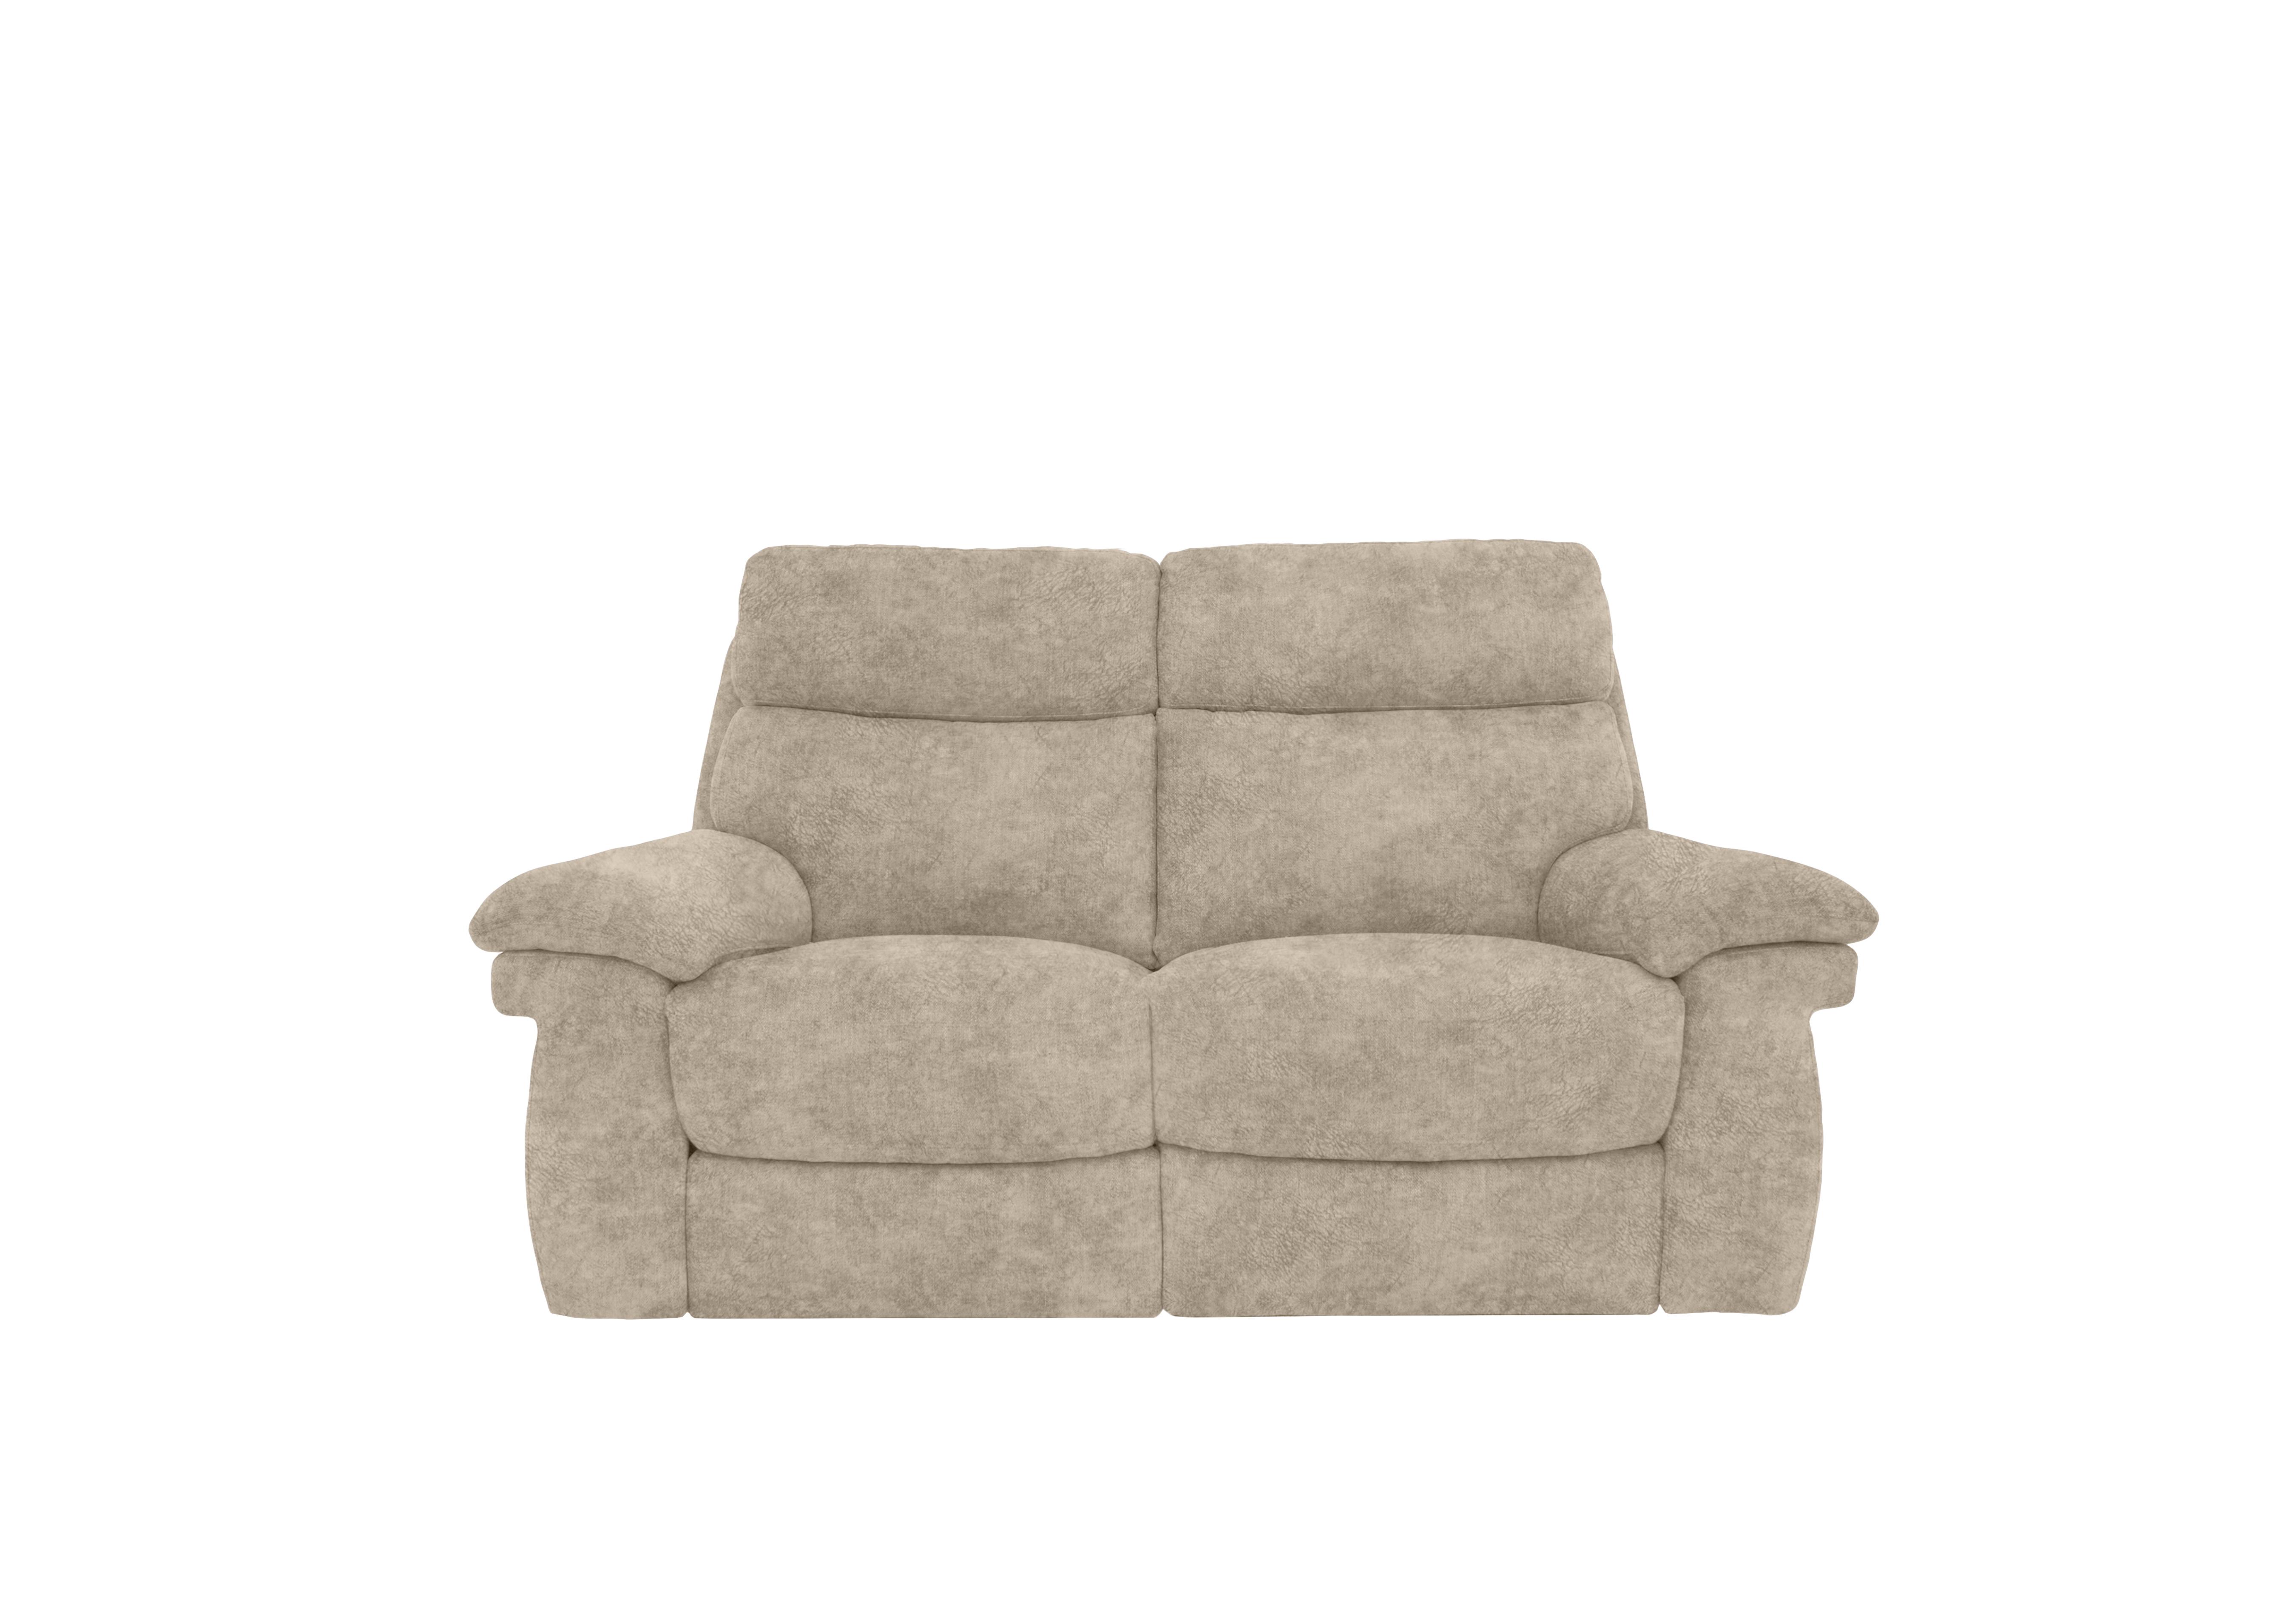 Serene 2 Seater Fabric Sofa in Bfa-Bnn-R26 Cream on Furniture Village